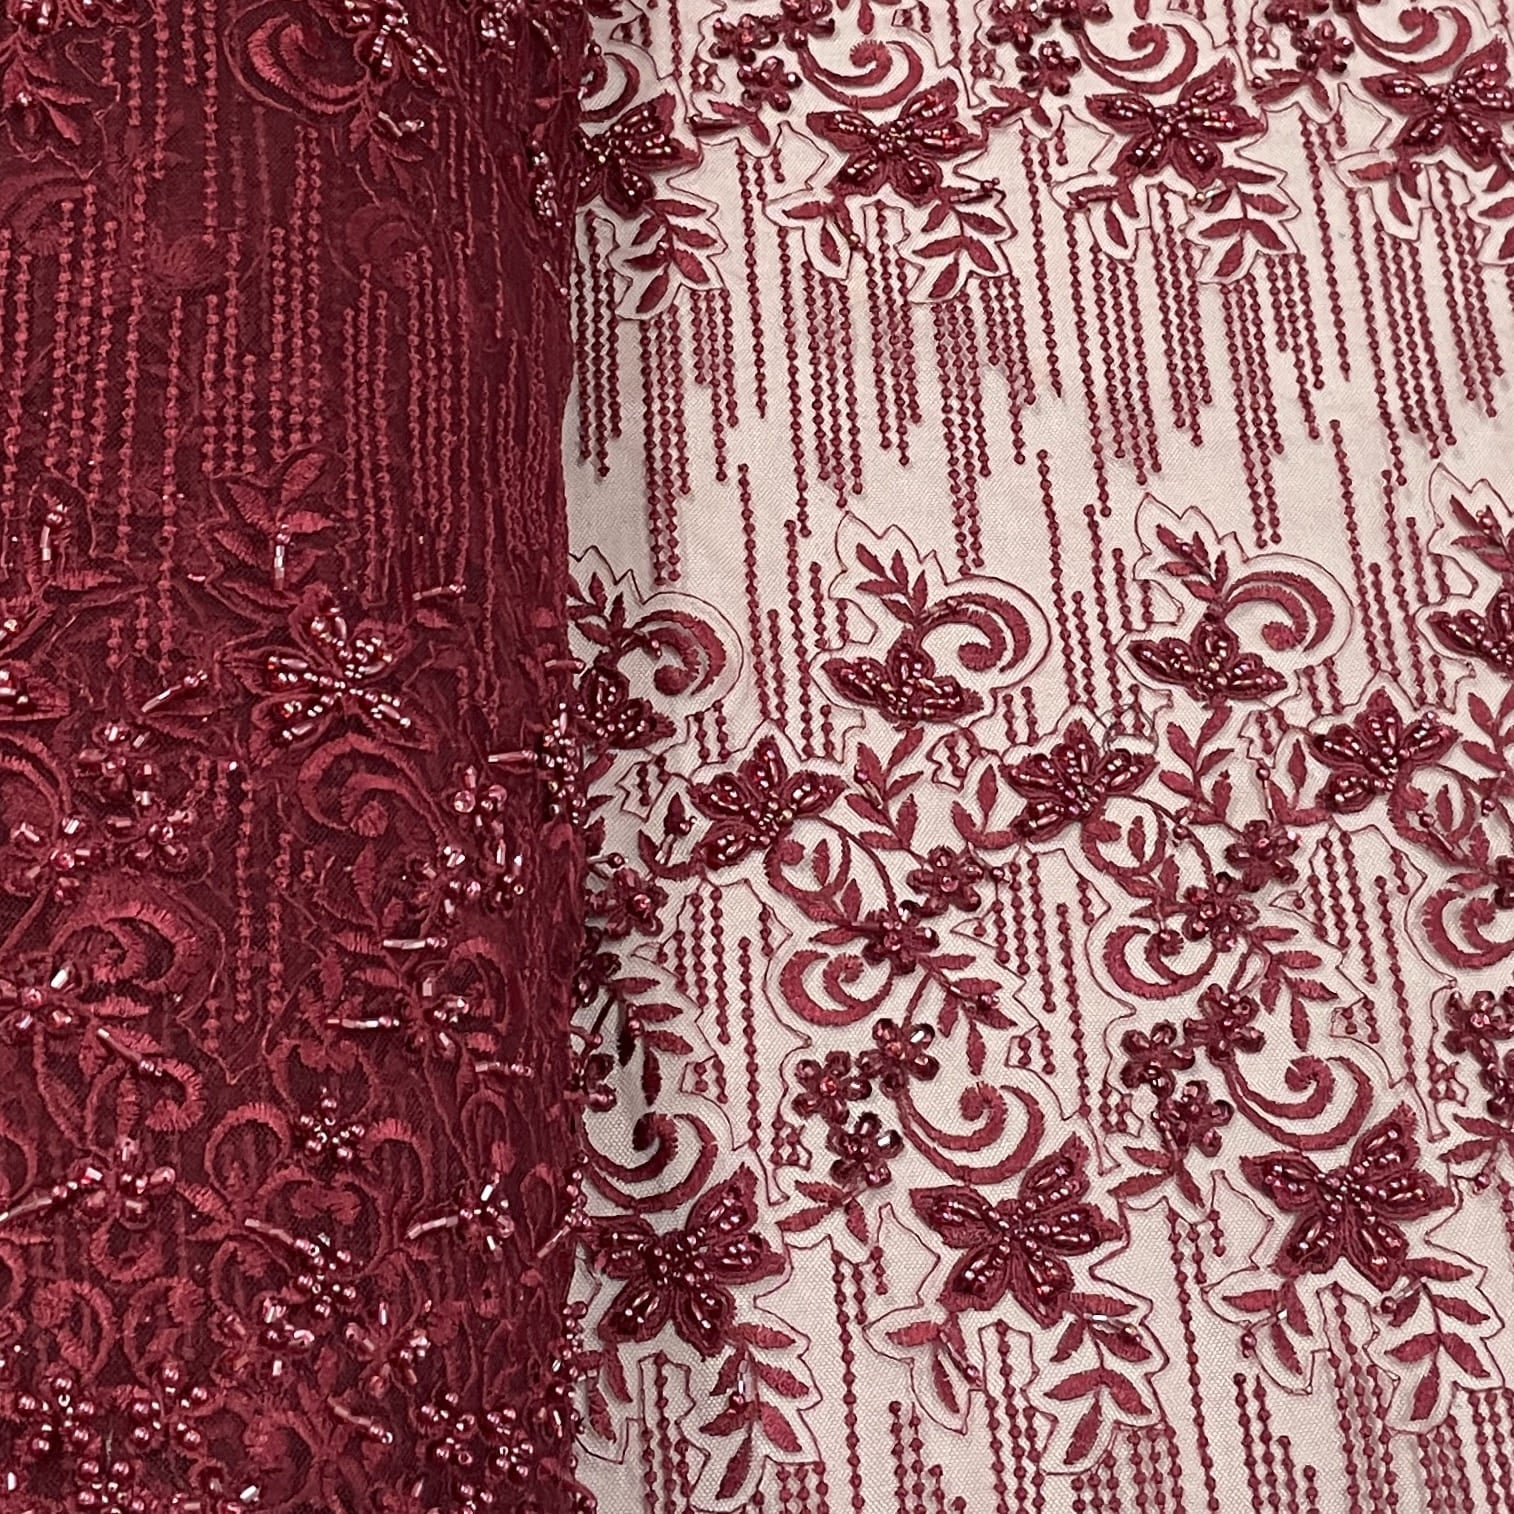 Maroon Net Fabric 